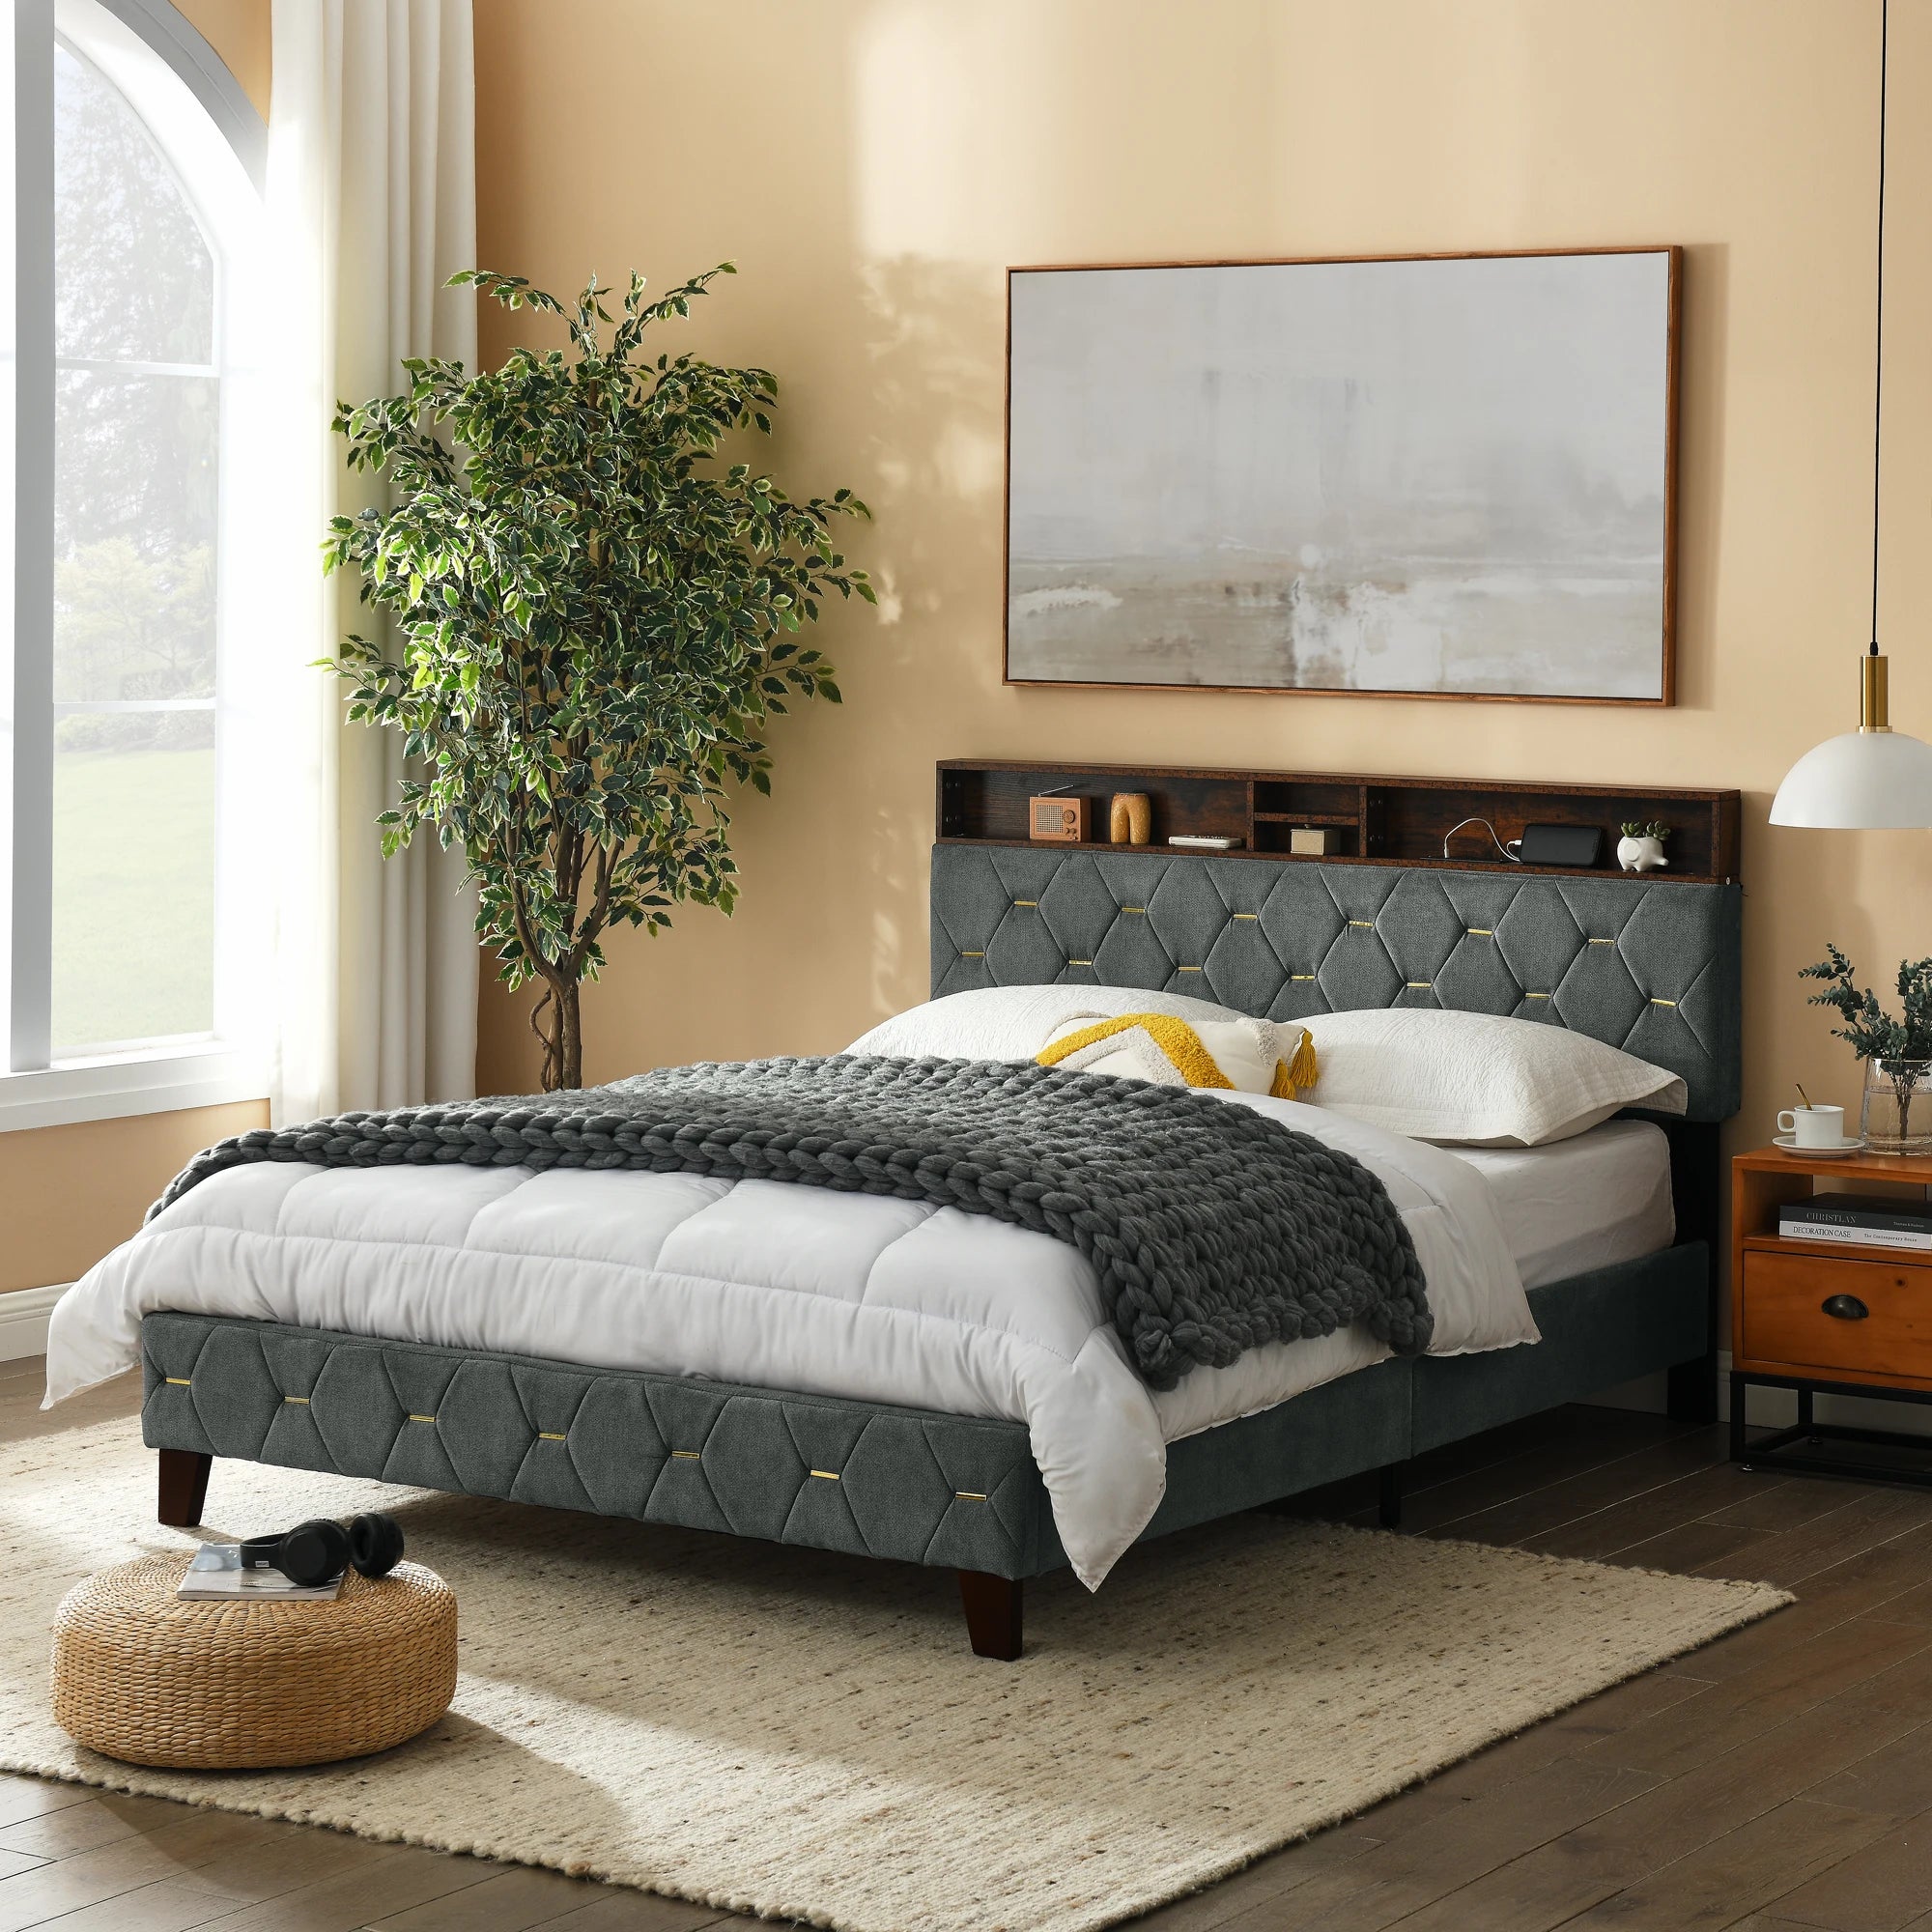 Queen/Full Bed Frame Shelf Upholstered Headboard Platform Bed W/Outlet&USB Ports Wood Legs Grey/Beige Easy Assembly[US-W]